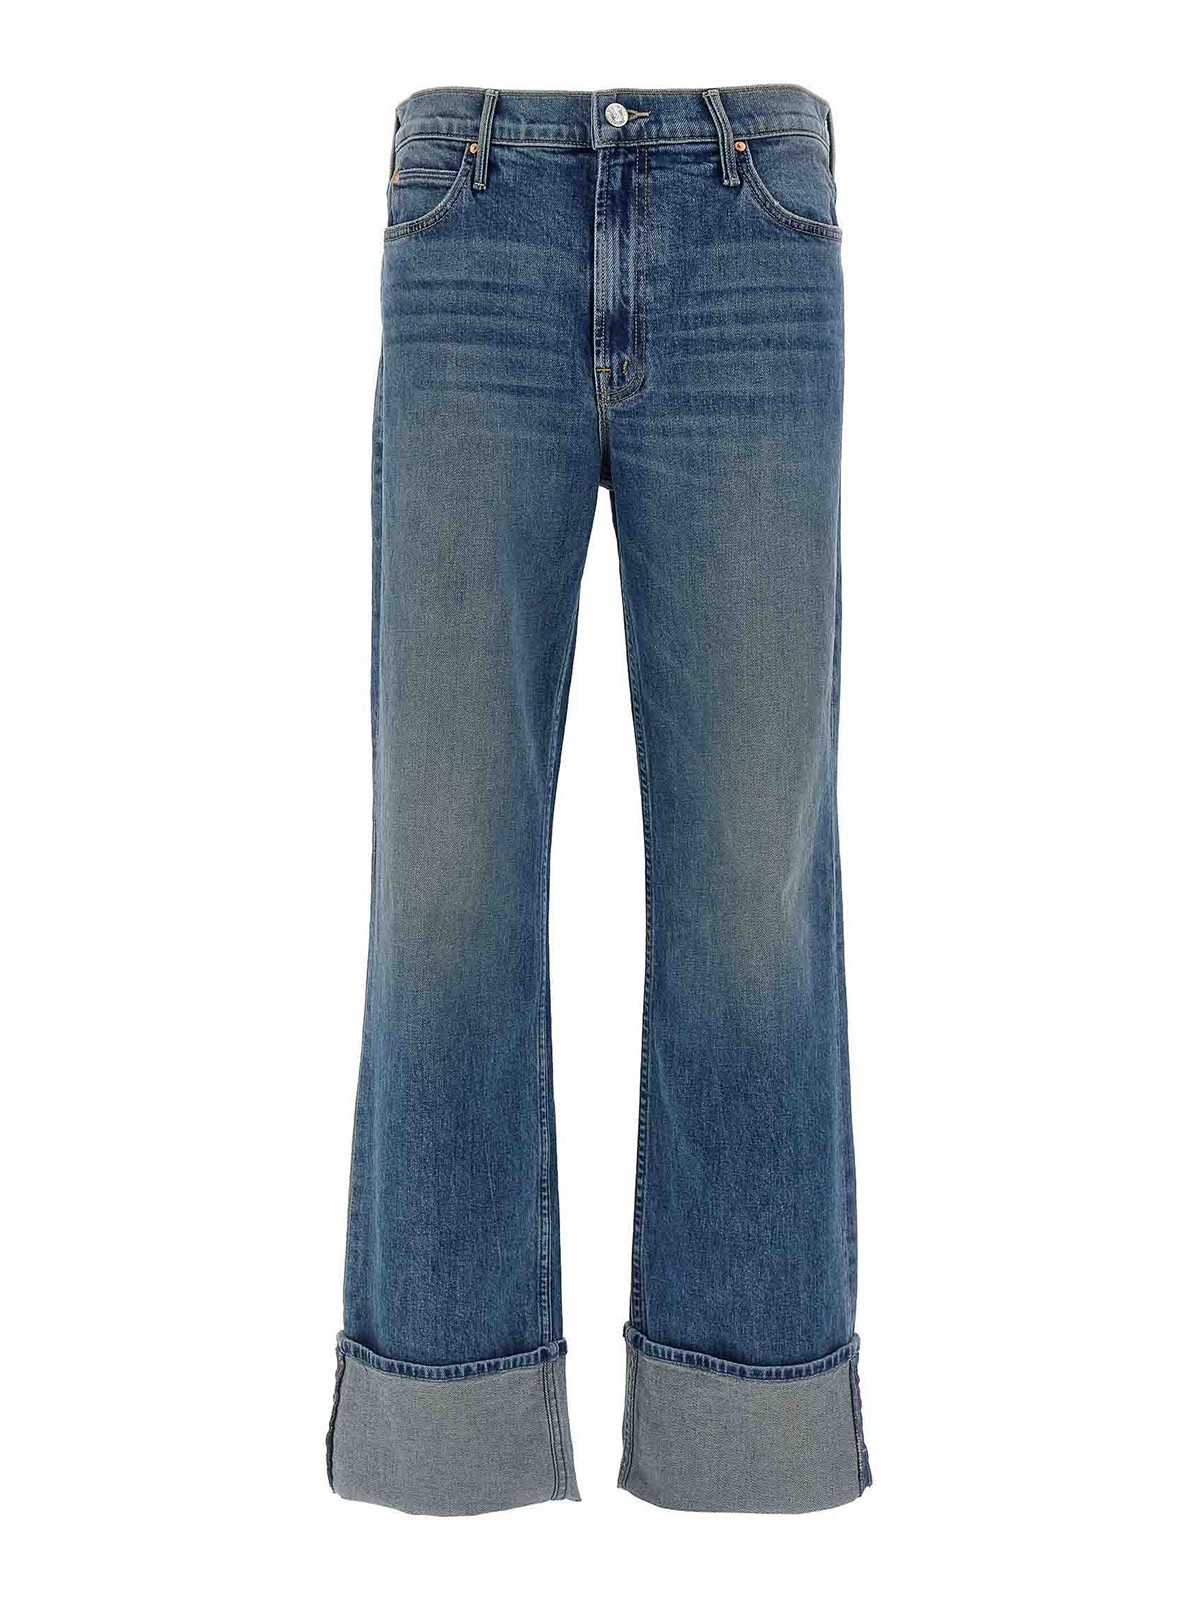 Shop Mother Jeans Boot-cut - Azul Claro